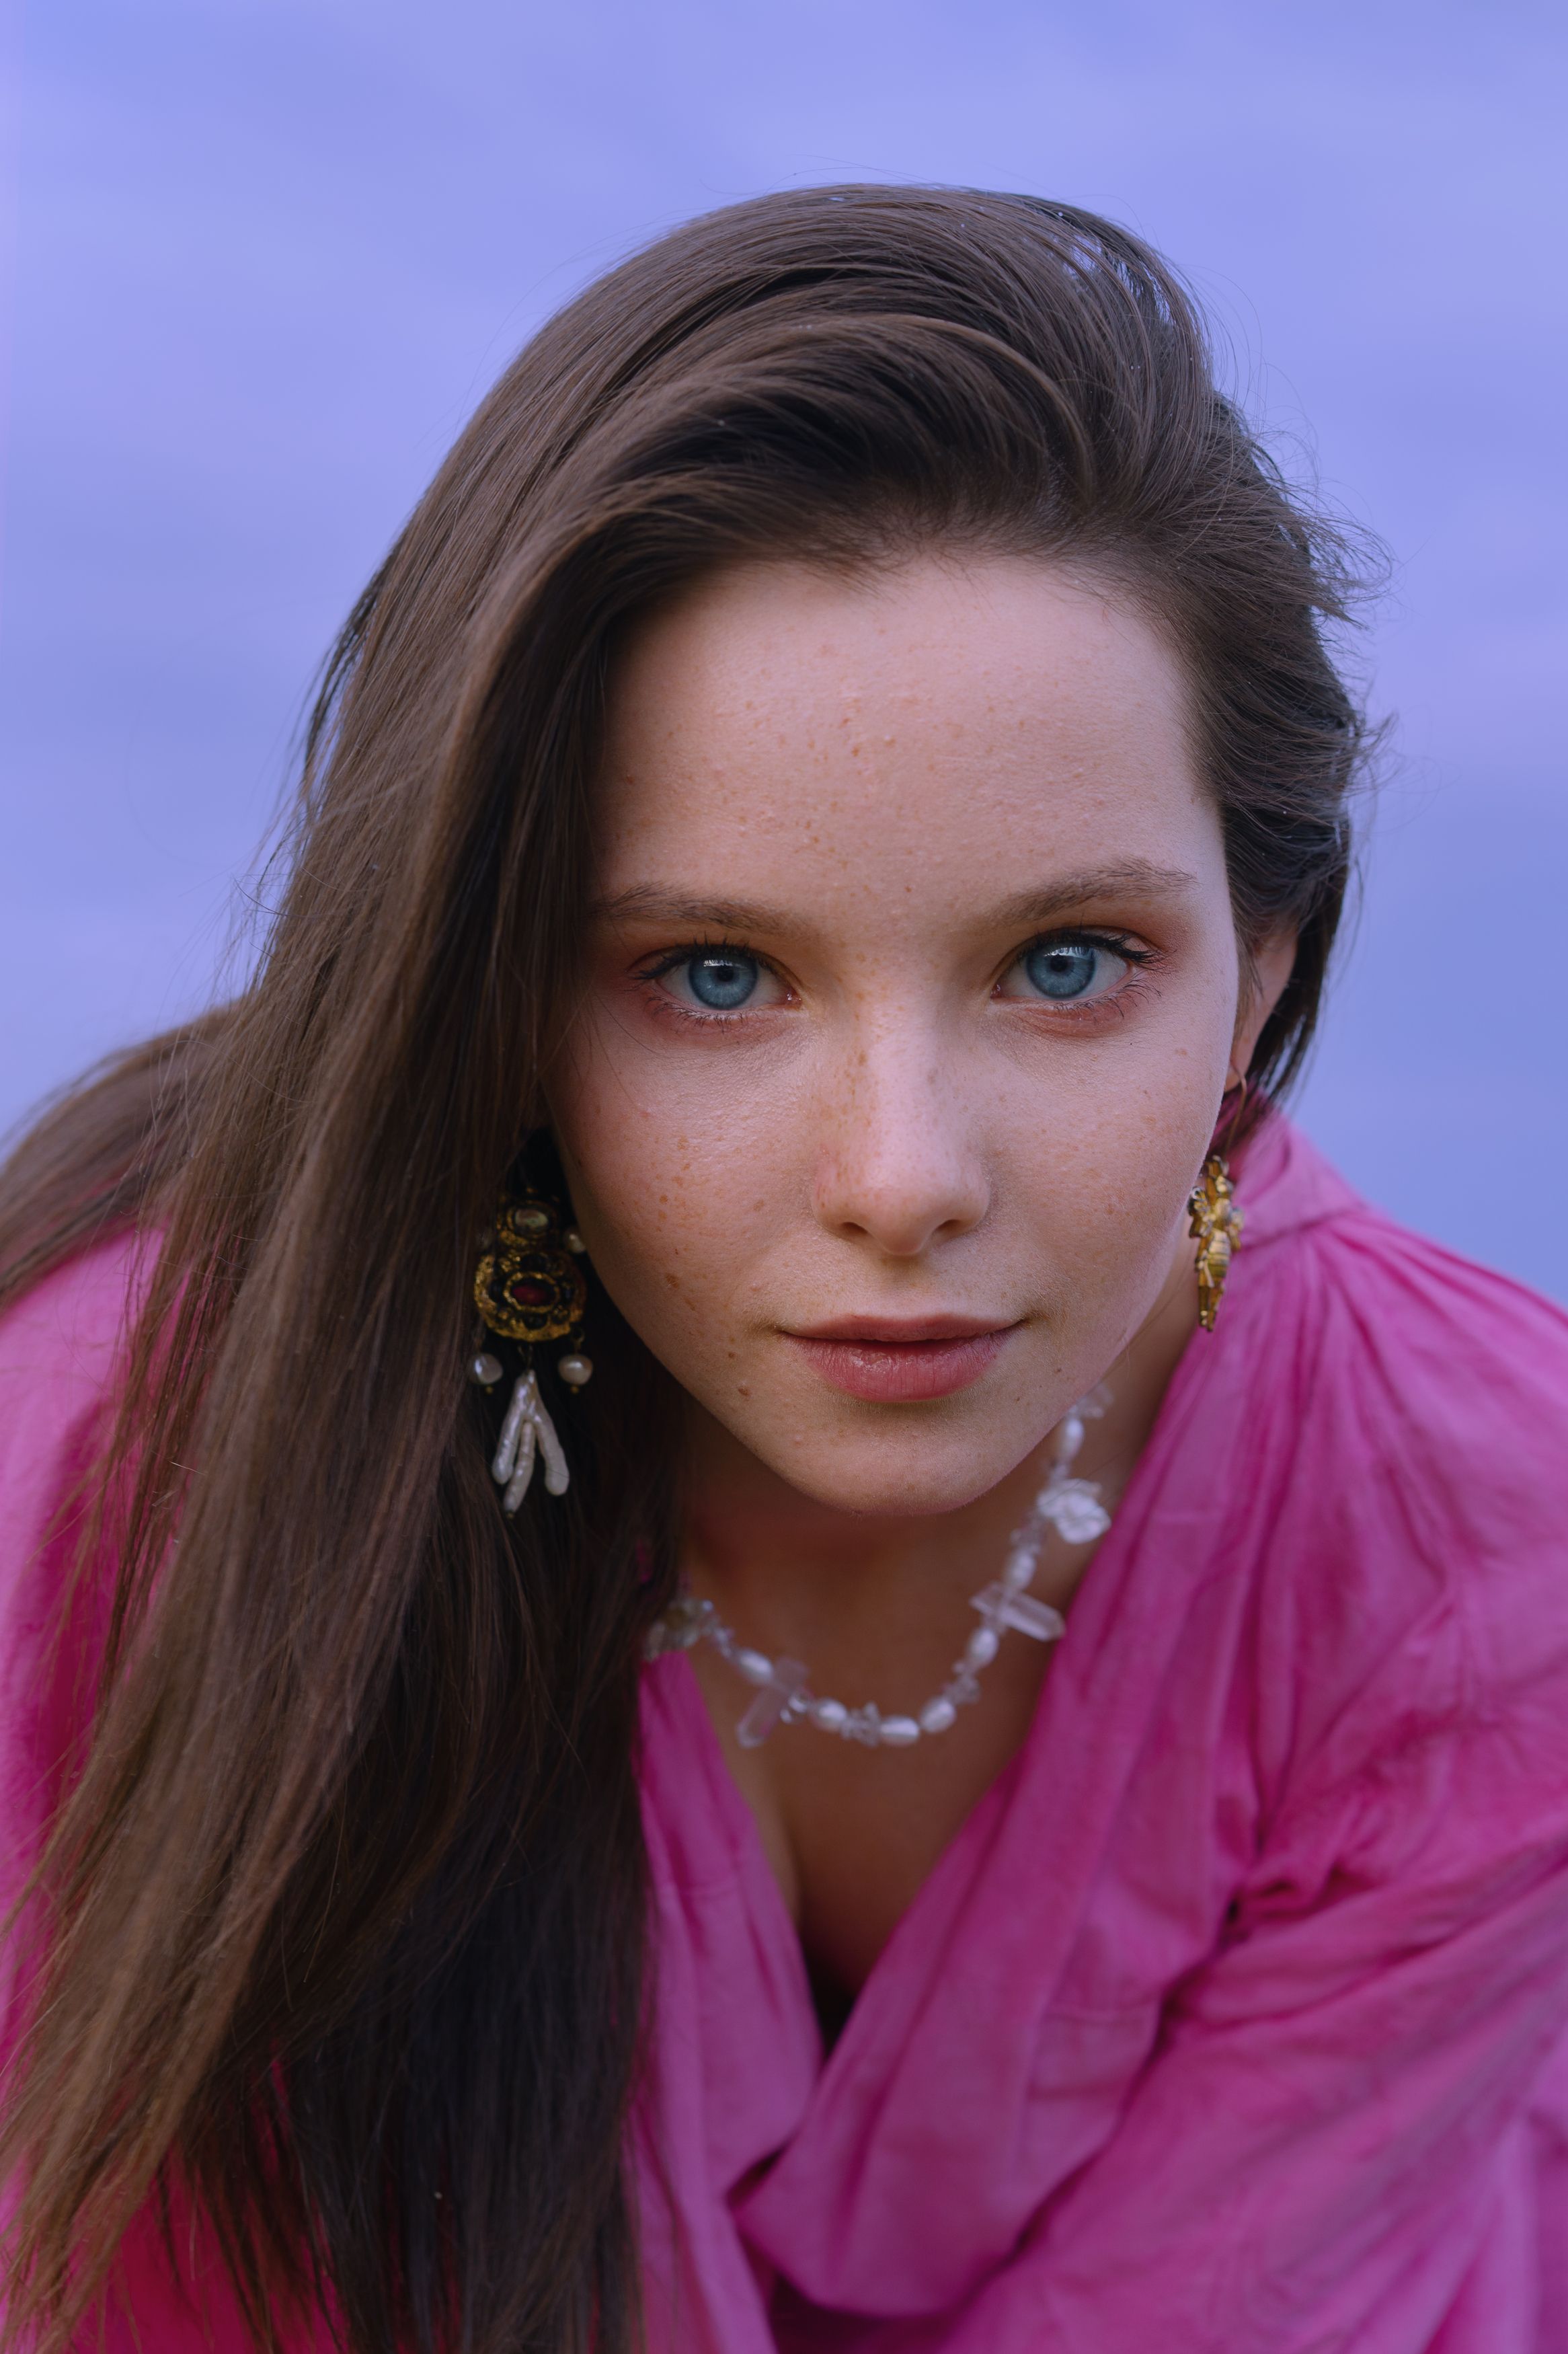 Natasha Yankelevich Women Portrait Blue Eyes Freckles Pink Clothing 2332x3500